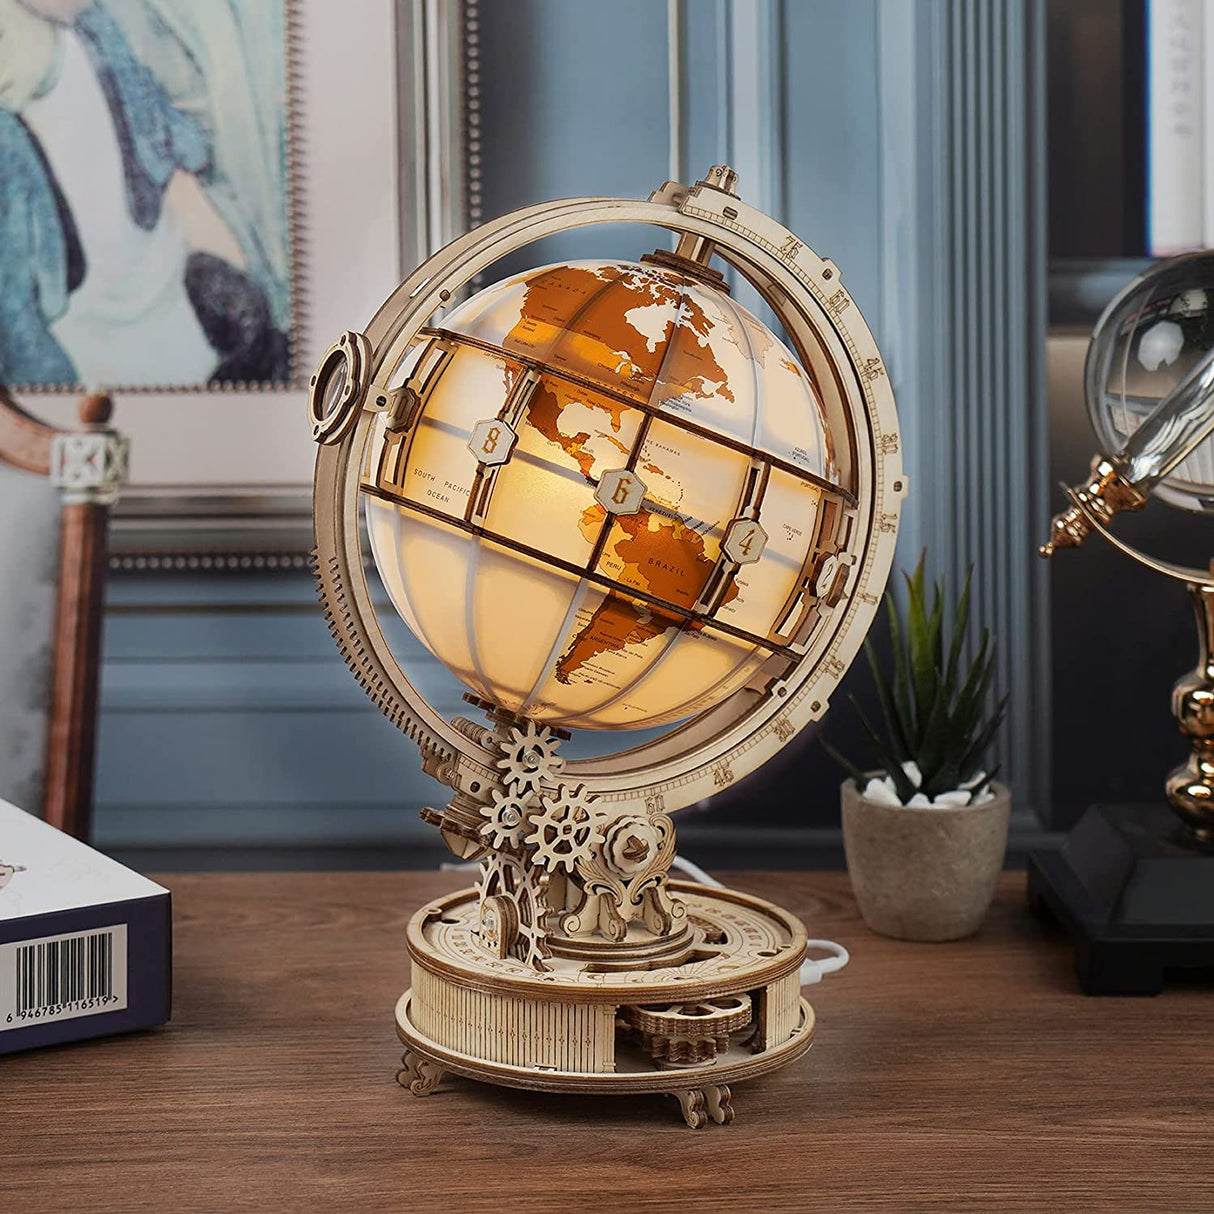 180PCS Luminous 3D Wooden Globe